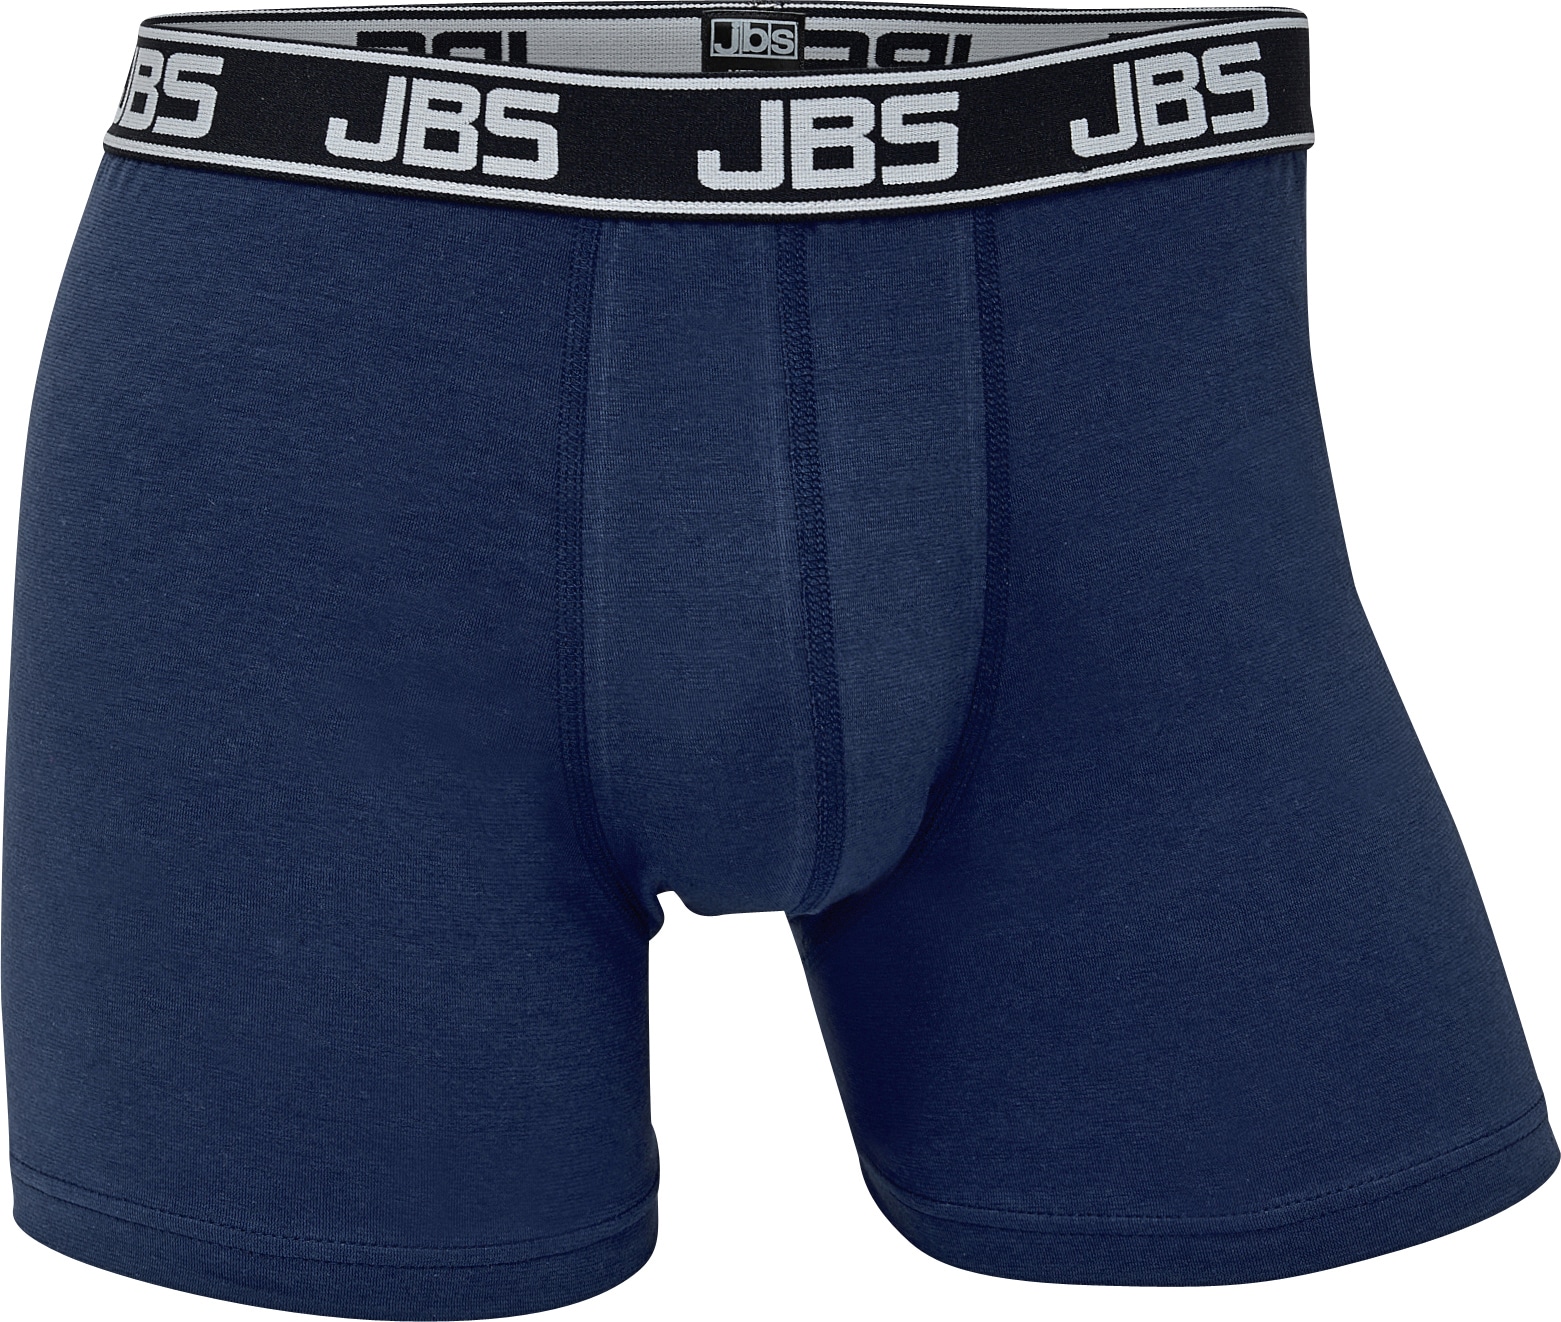 JBS tights - 2XL - NAVY